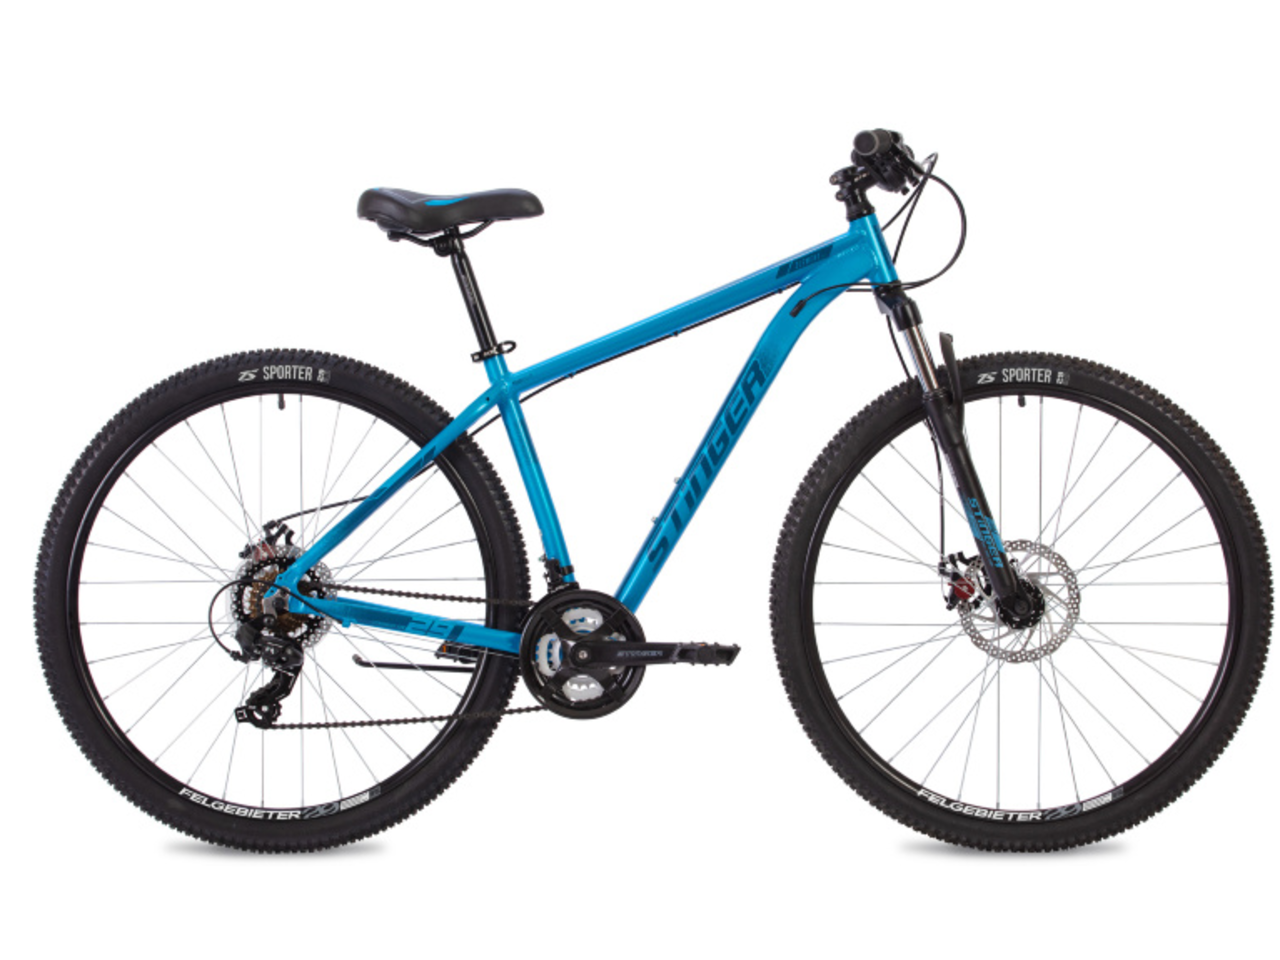 Велосипед Stinger Element Evo 26 (14, синий, 2021)